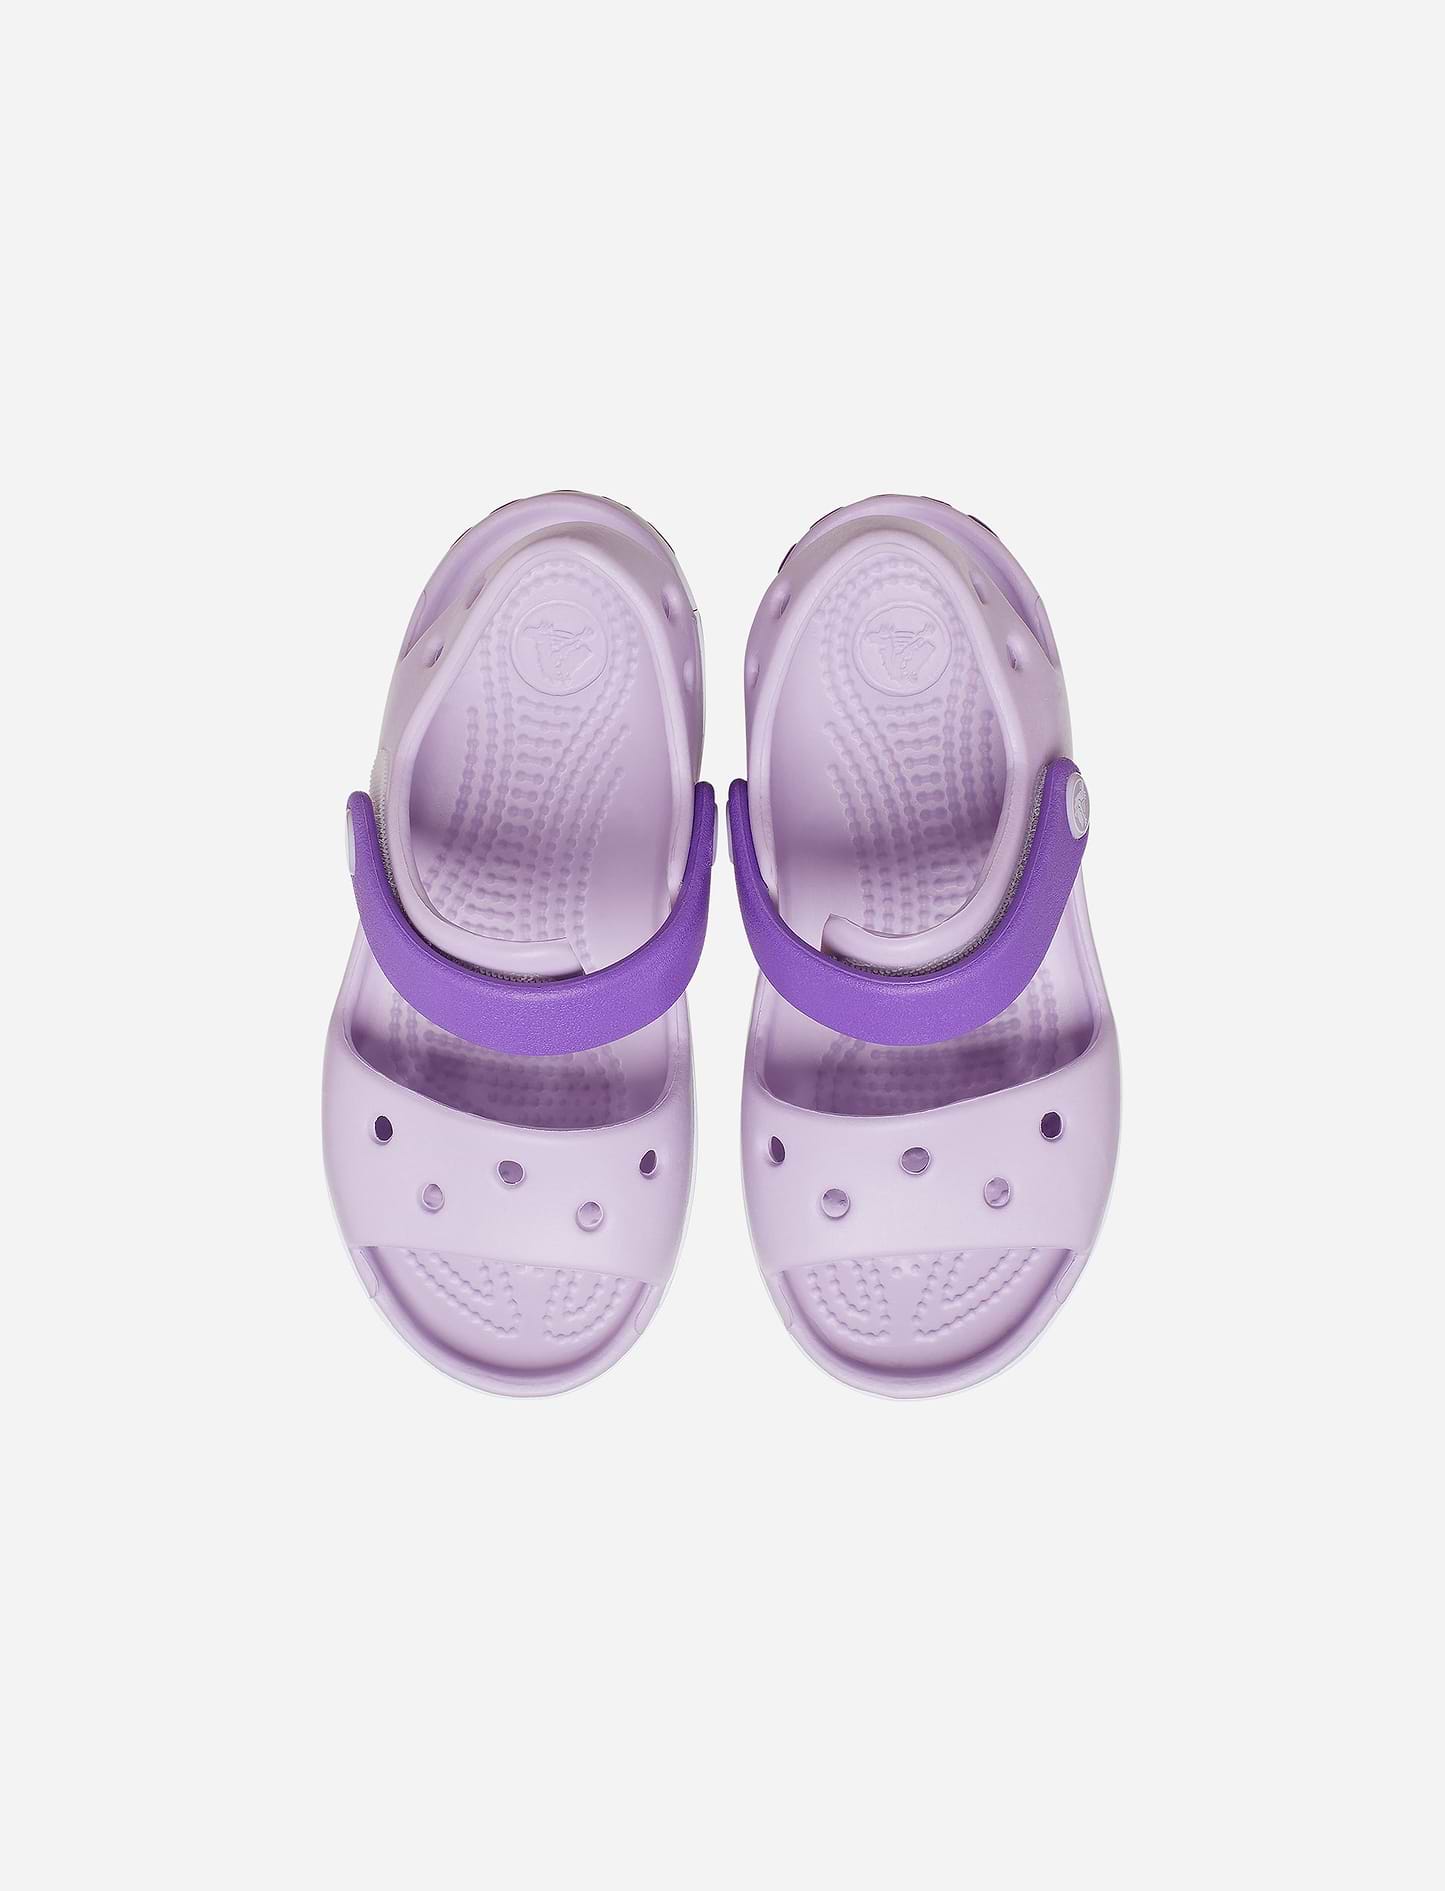 Crocs Crocband Sandal Kids - סנדל קרוקס קרוקבנד לילדים